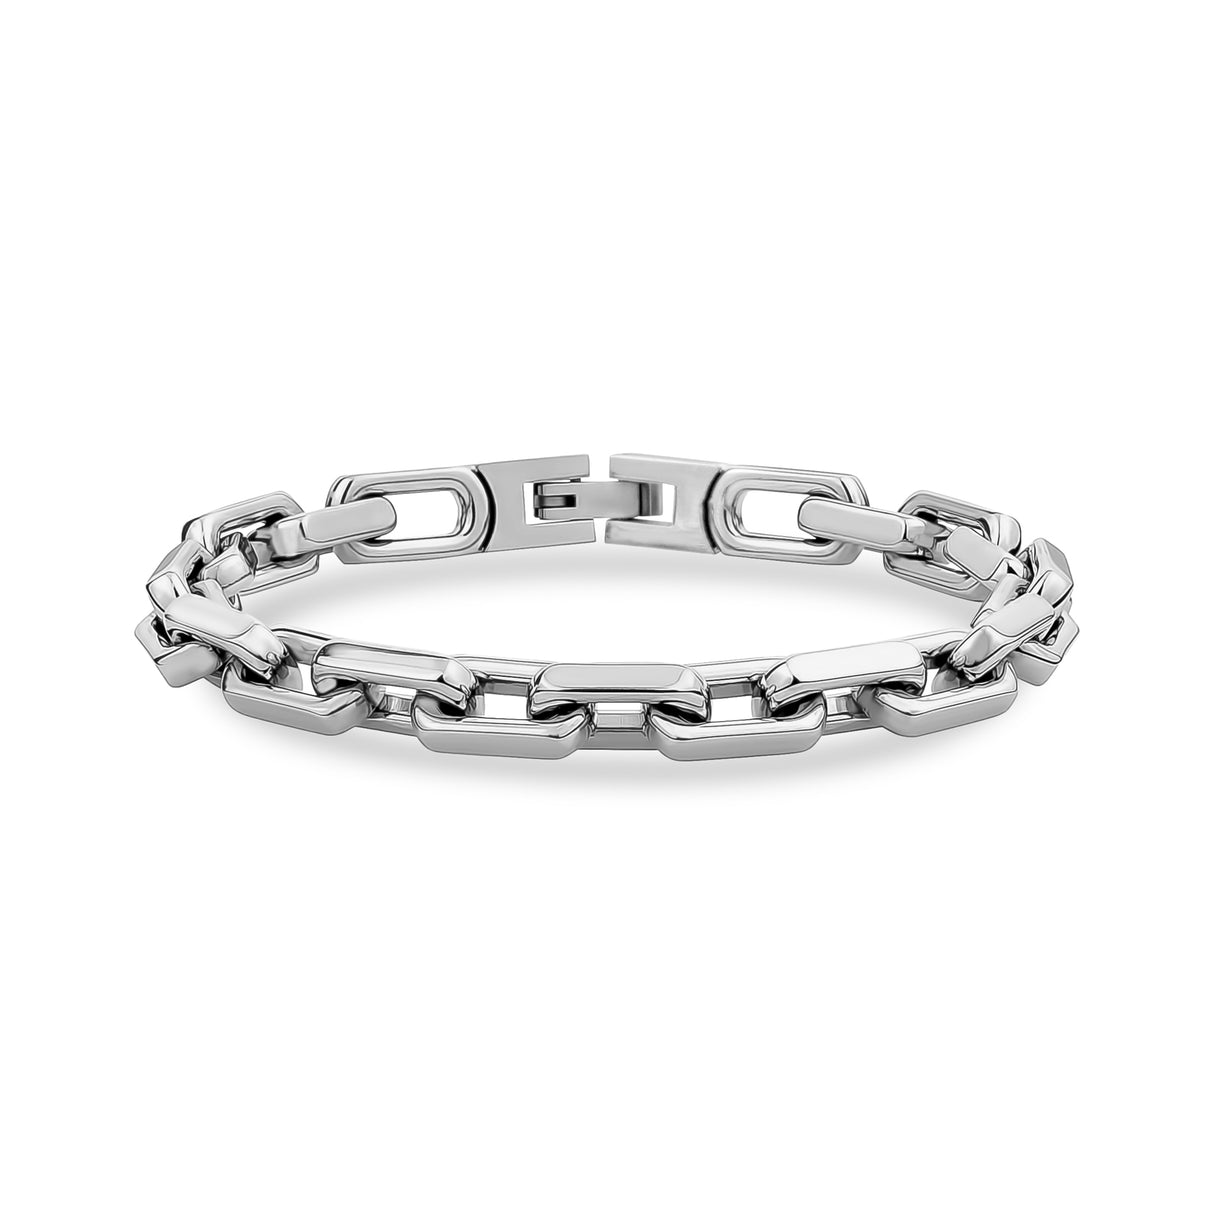 7mm Stainless steel elongated link bracelet for men